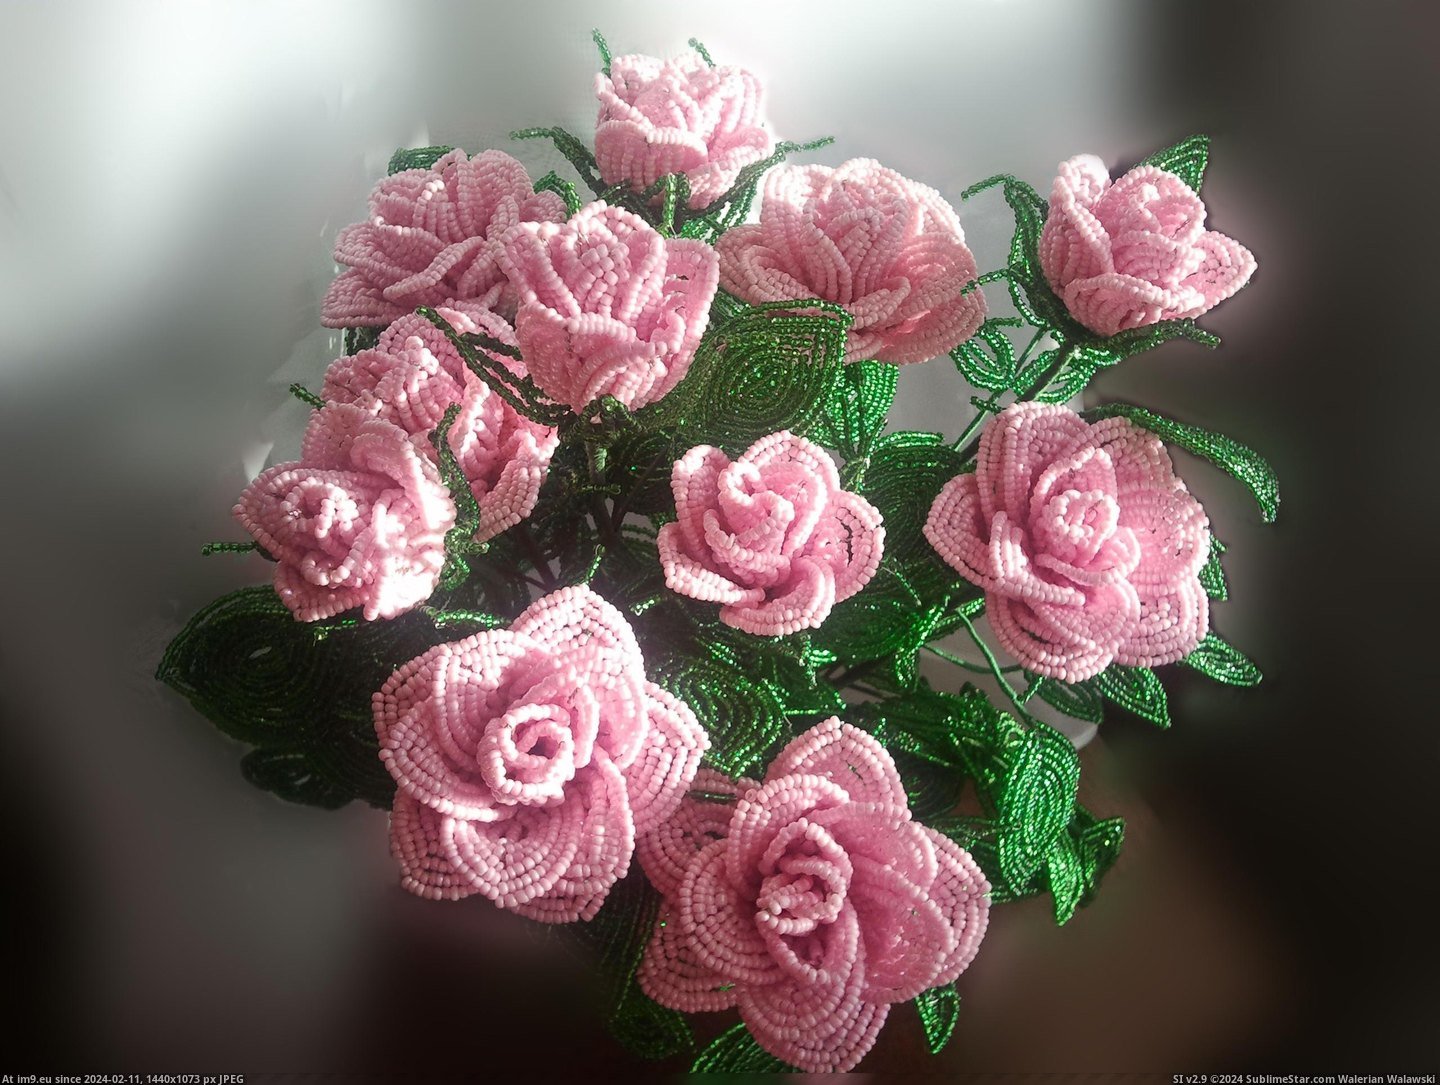 #Pink #Flowers #Bead #Roses #Craft Bead craft - flowers, pink roses Pic. (Bild von album Random images))